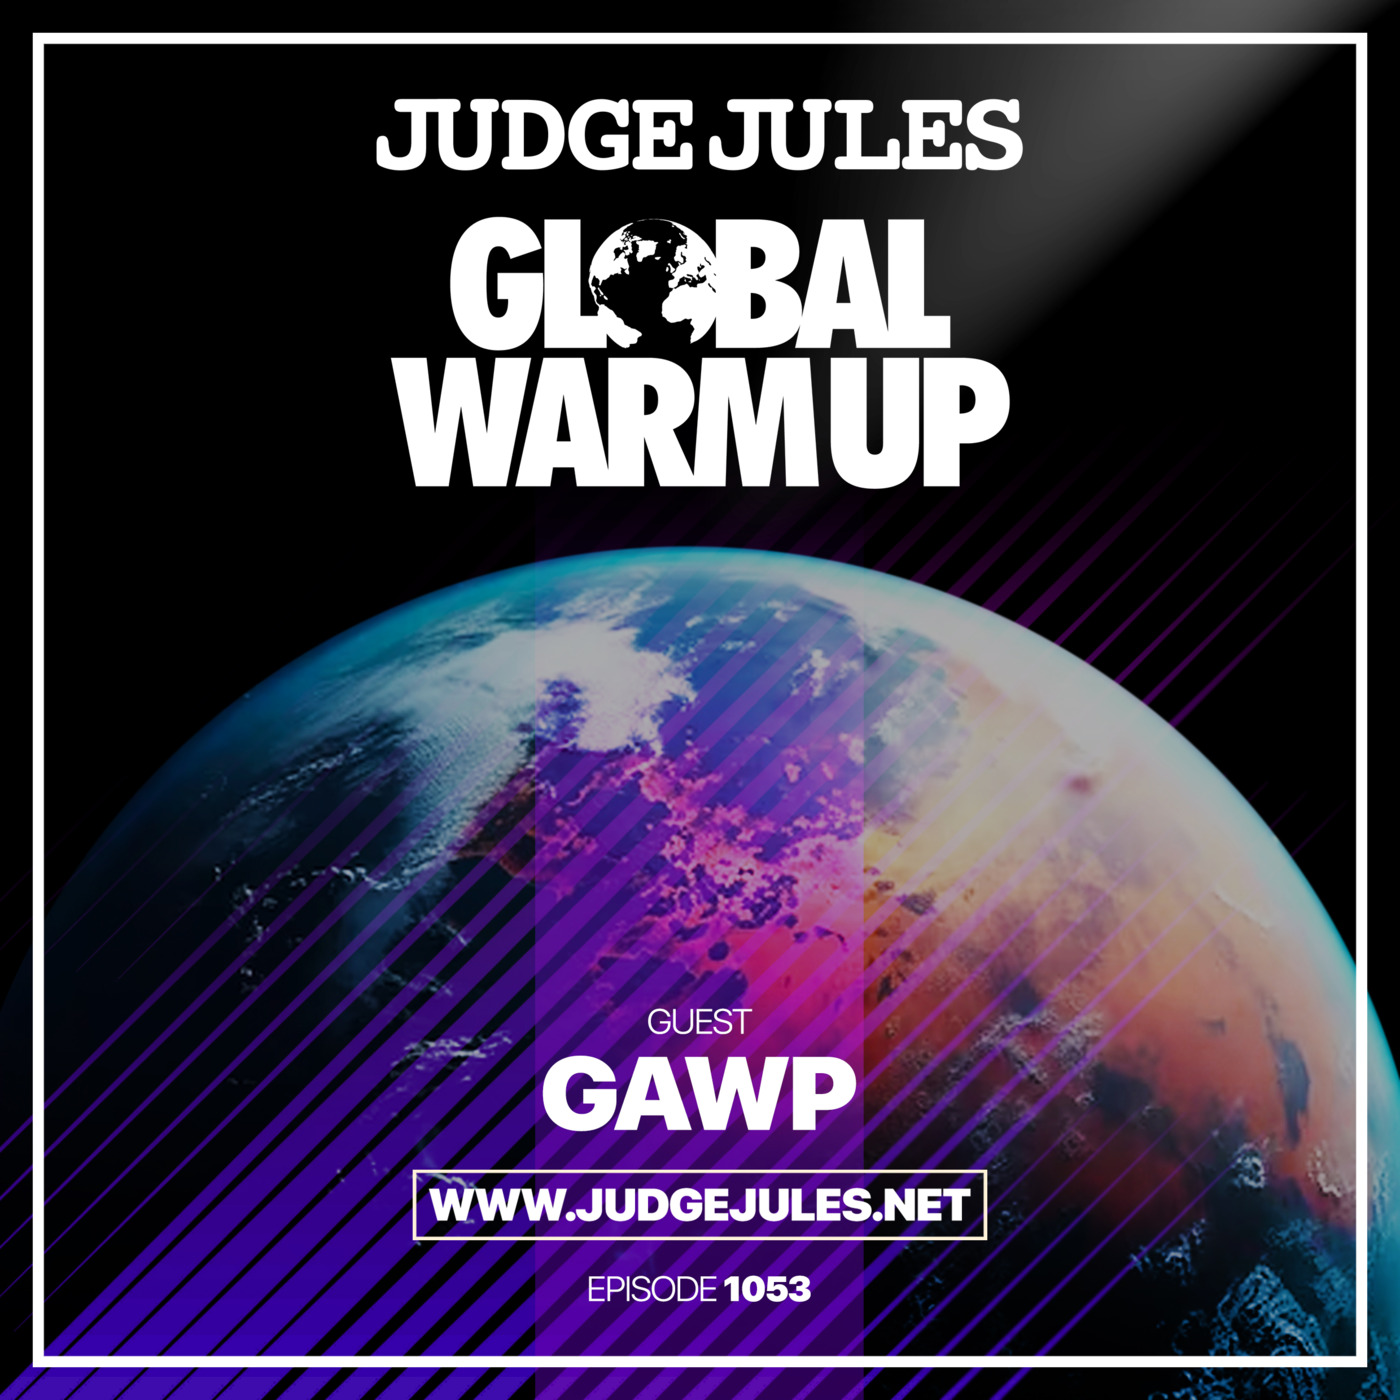 Episode 1053: JUDGE JULES PRESENTS THE GLOBAL WARM UP EPISODE 1053